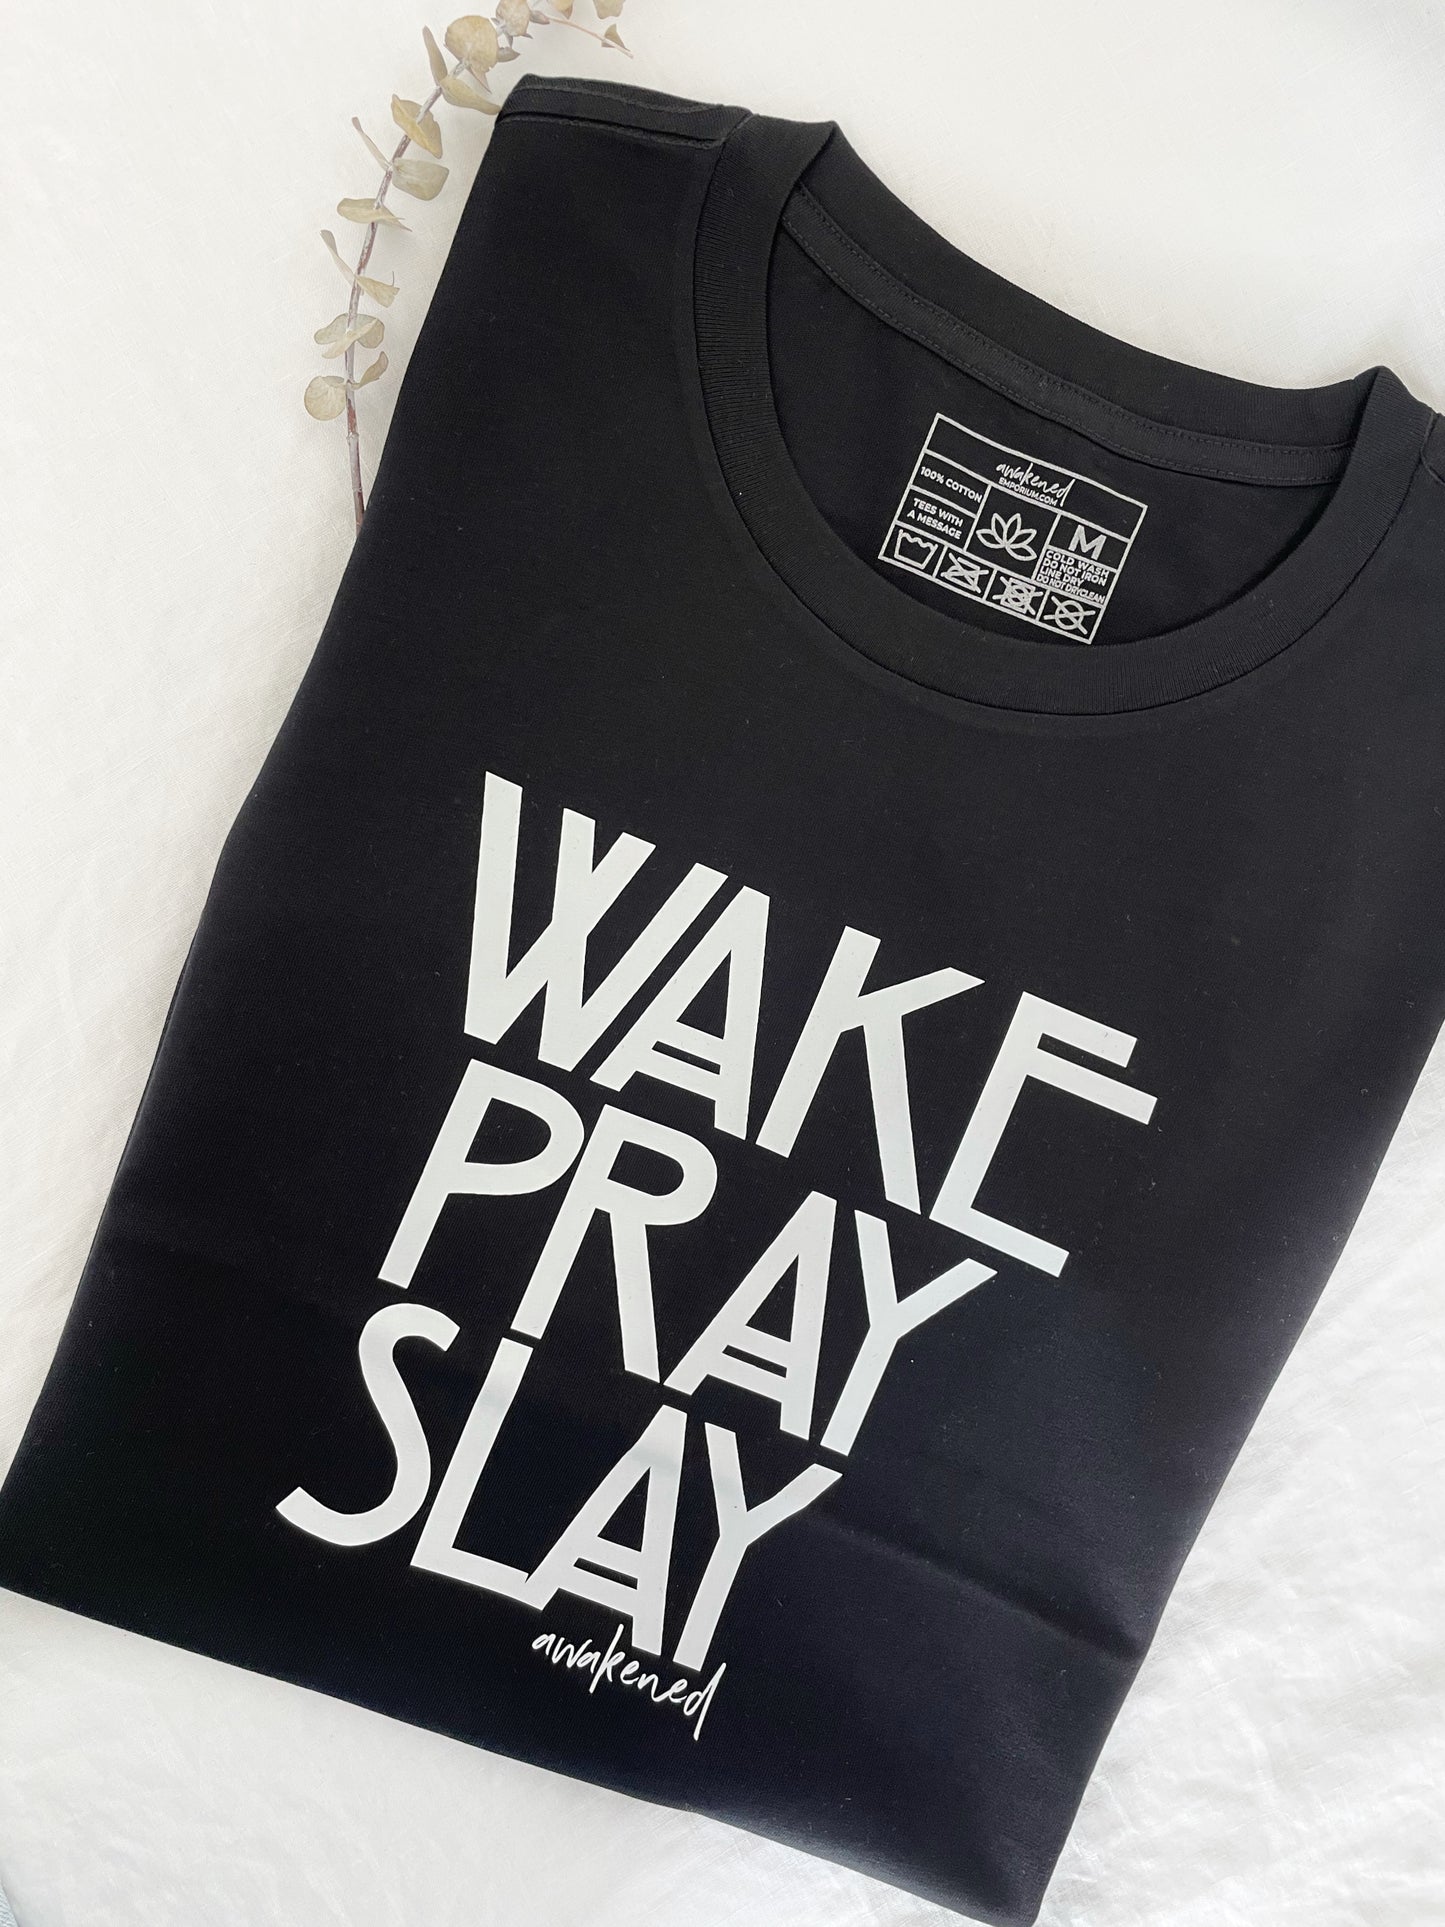 WAKE PRAY SLAY T-SHIRT | BLACK WITH WHITE